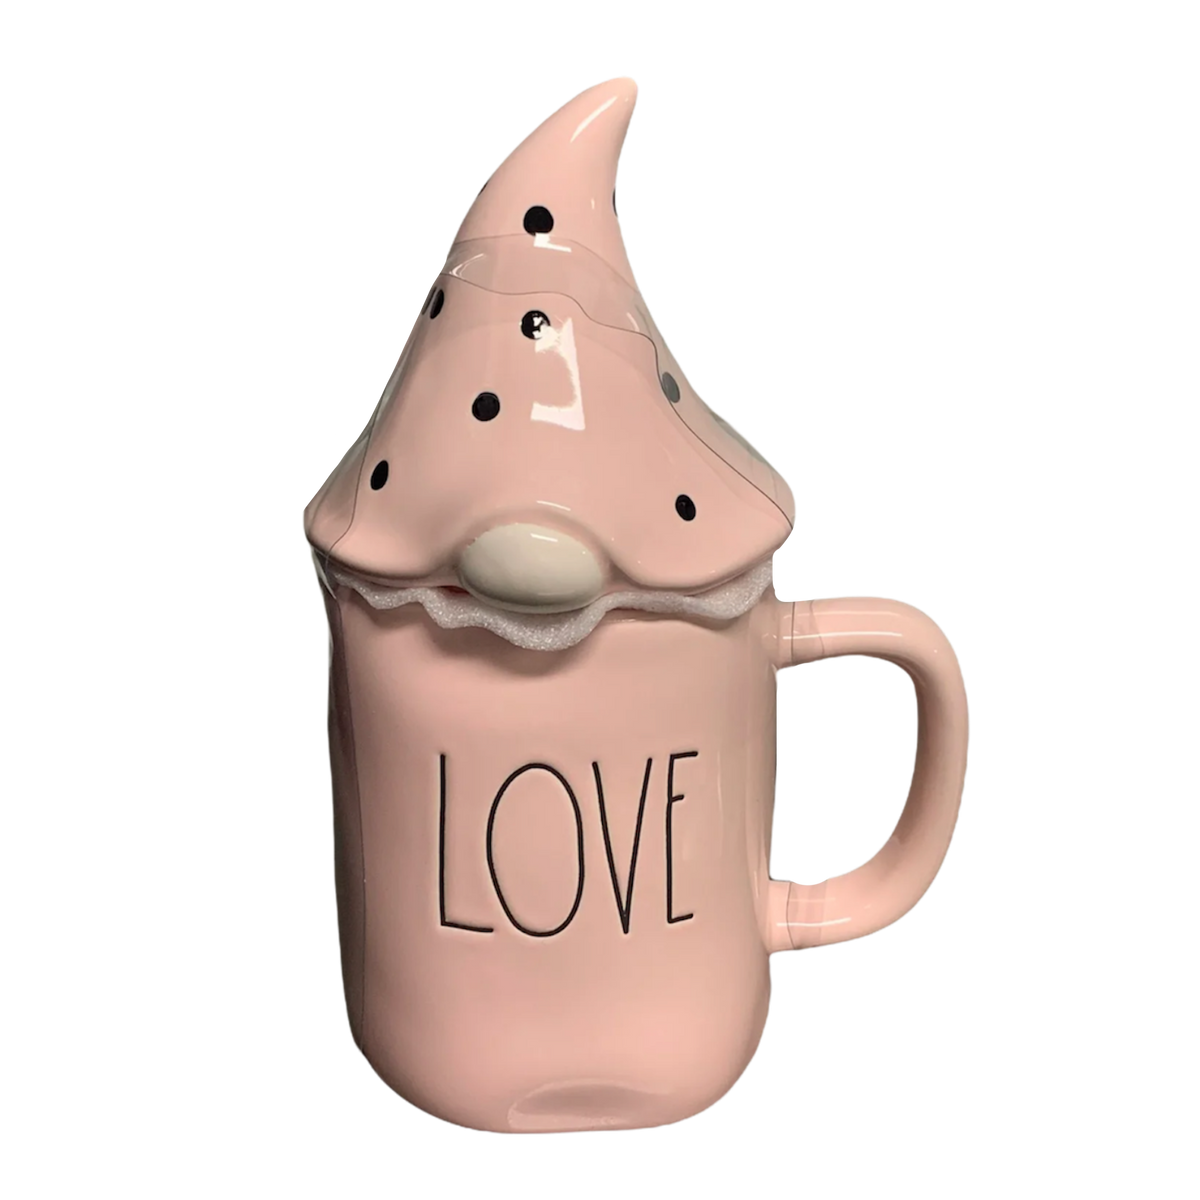 Valentine mug toppers, Valentine gnome mug toppers, rae dunn